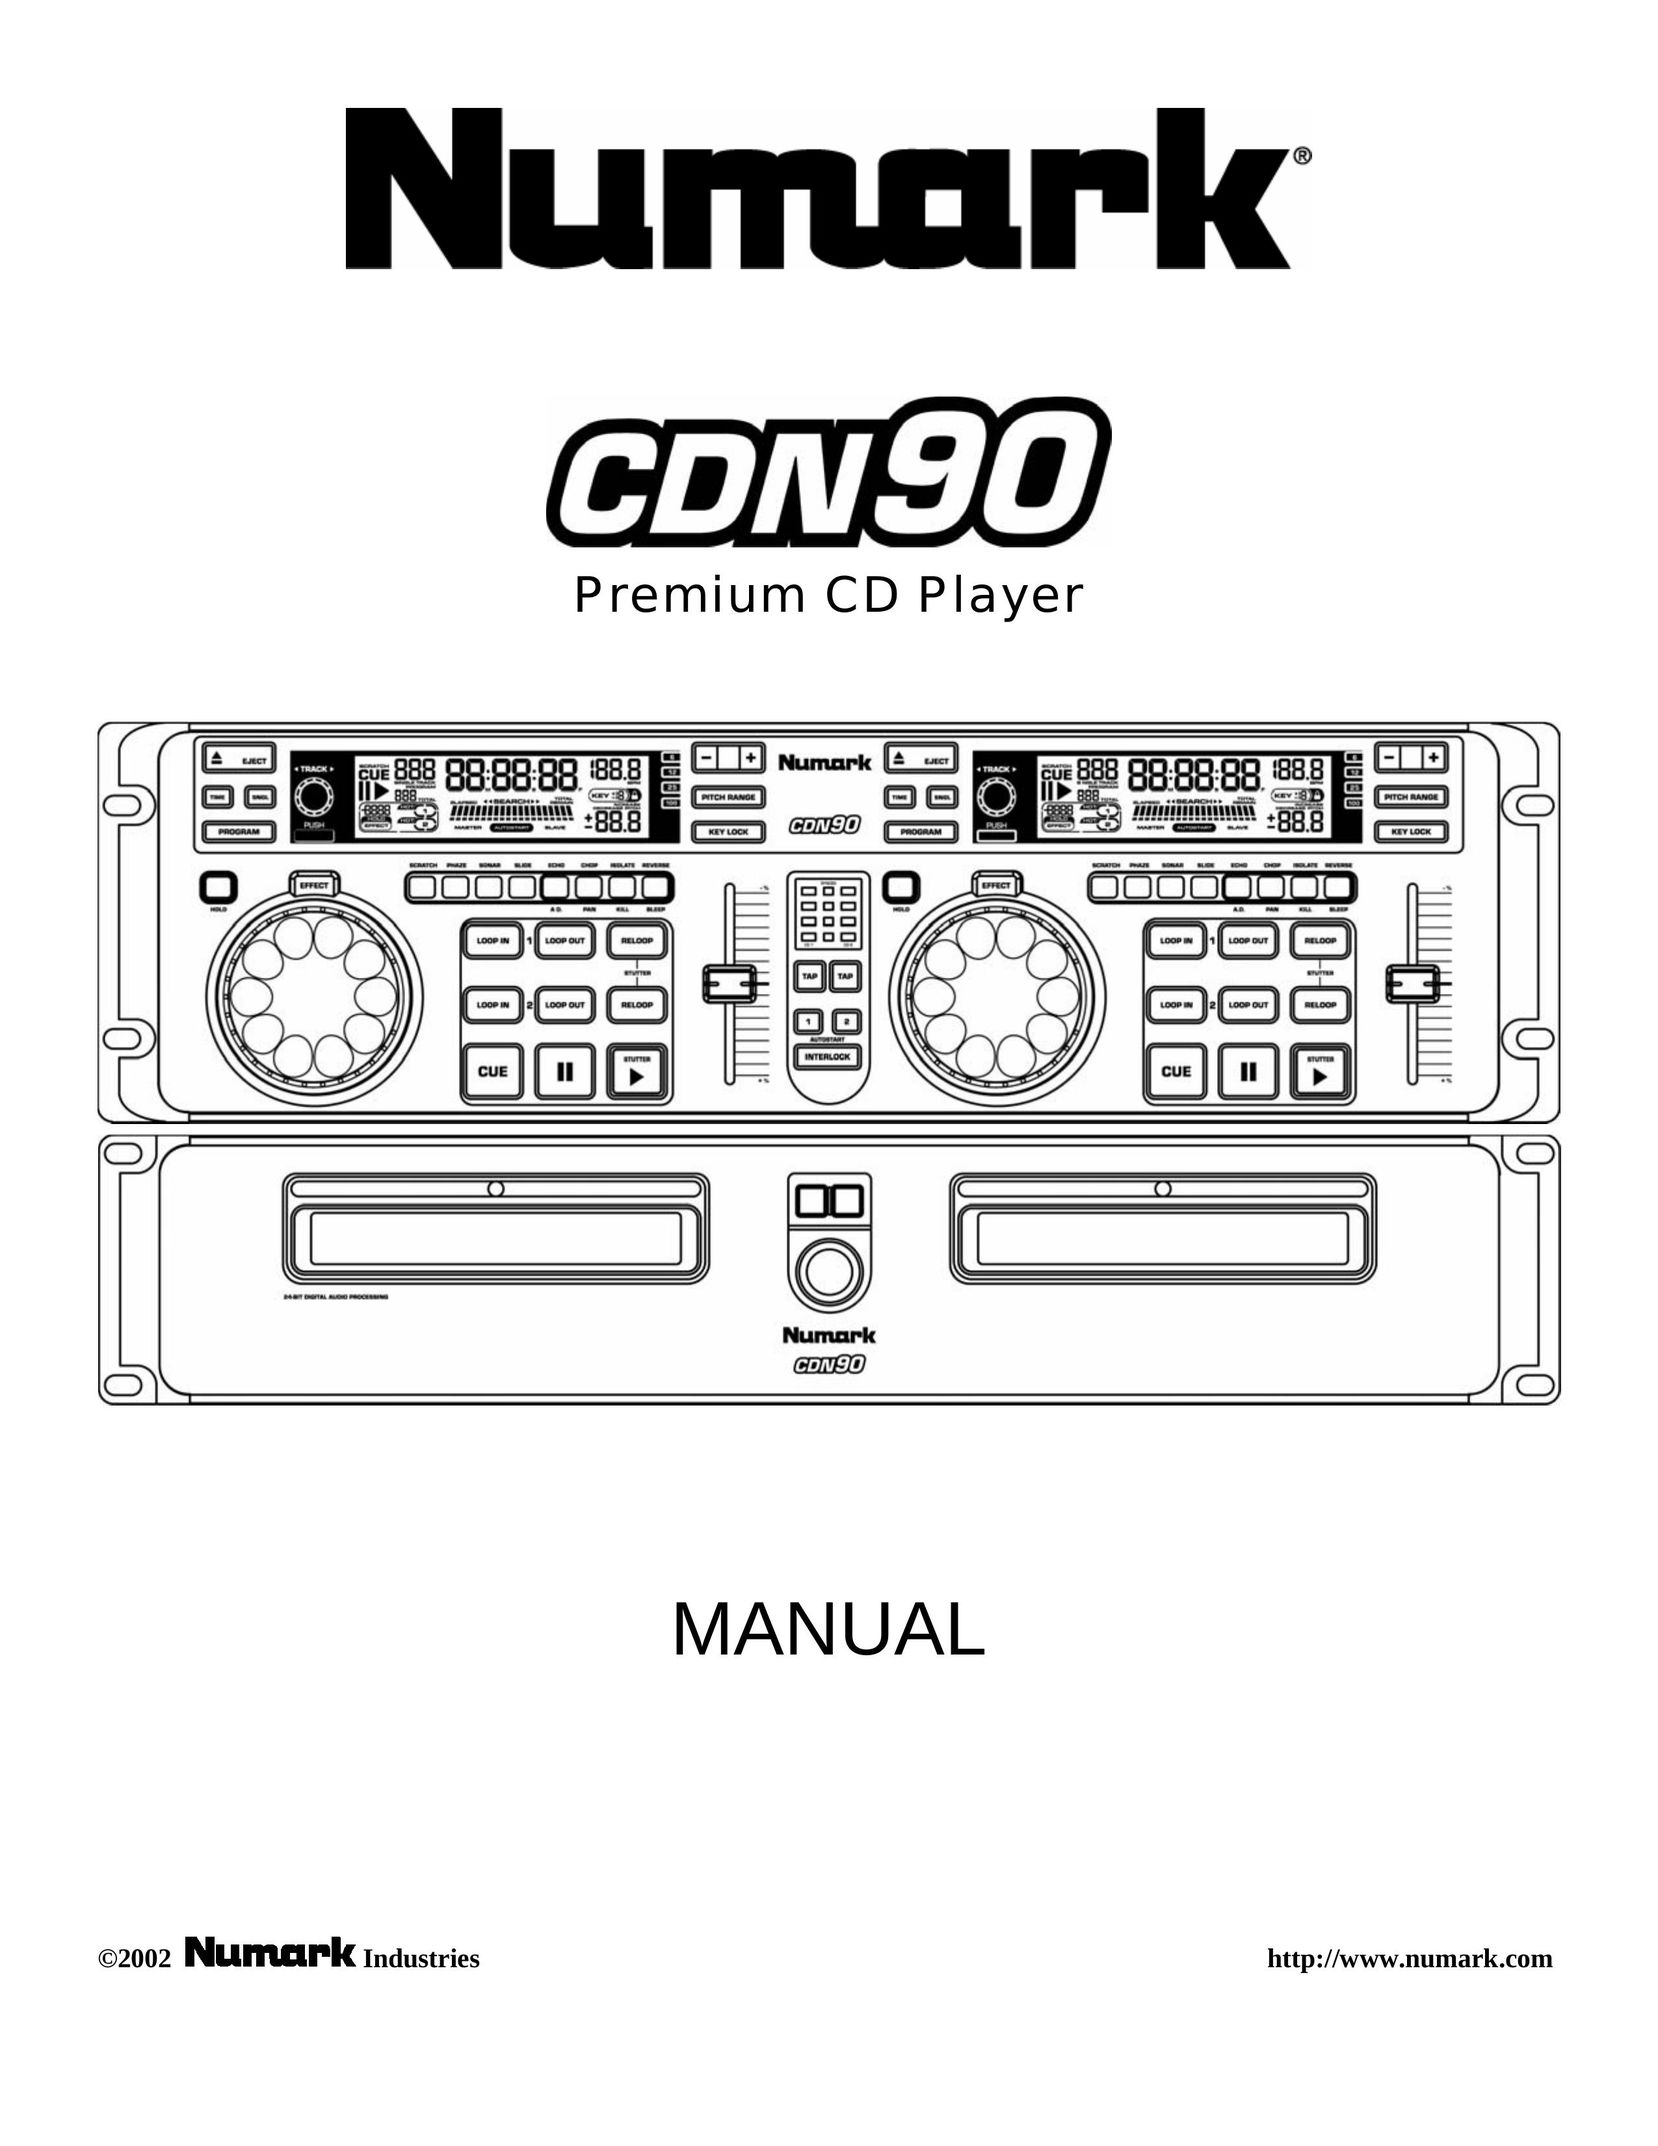 Numark Industries CDN90 CD Player User Manual